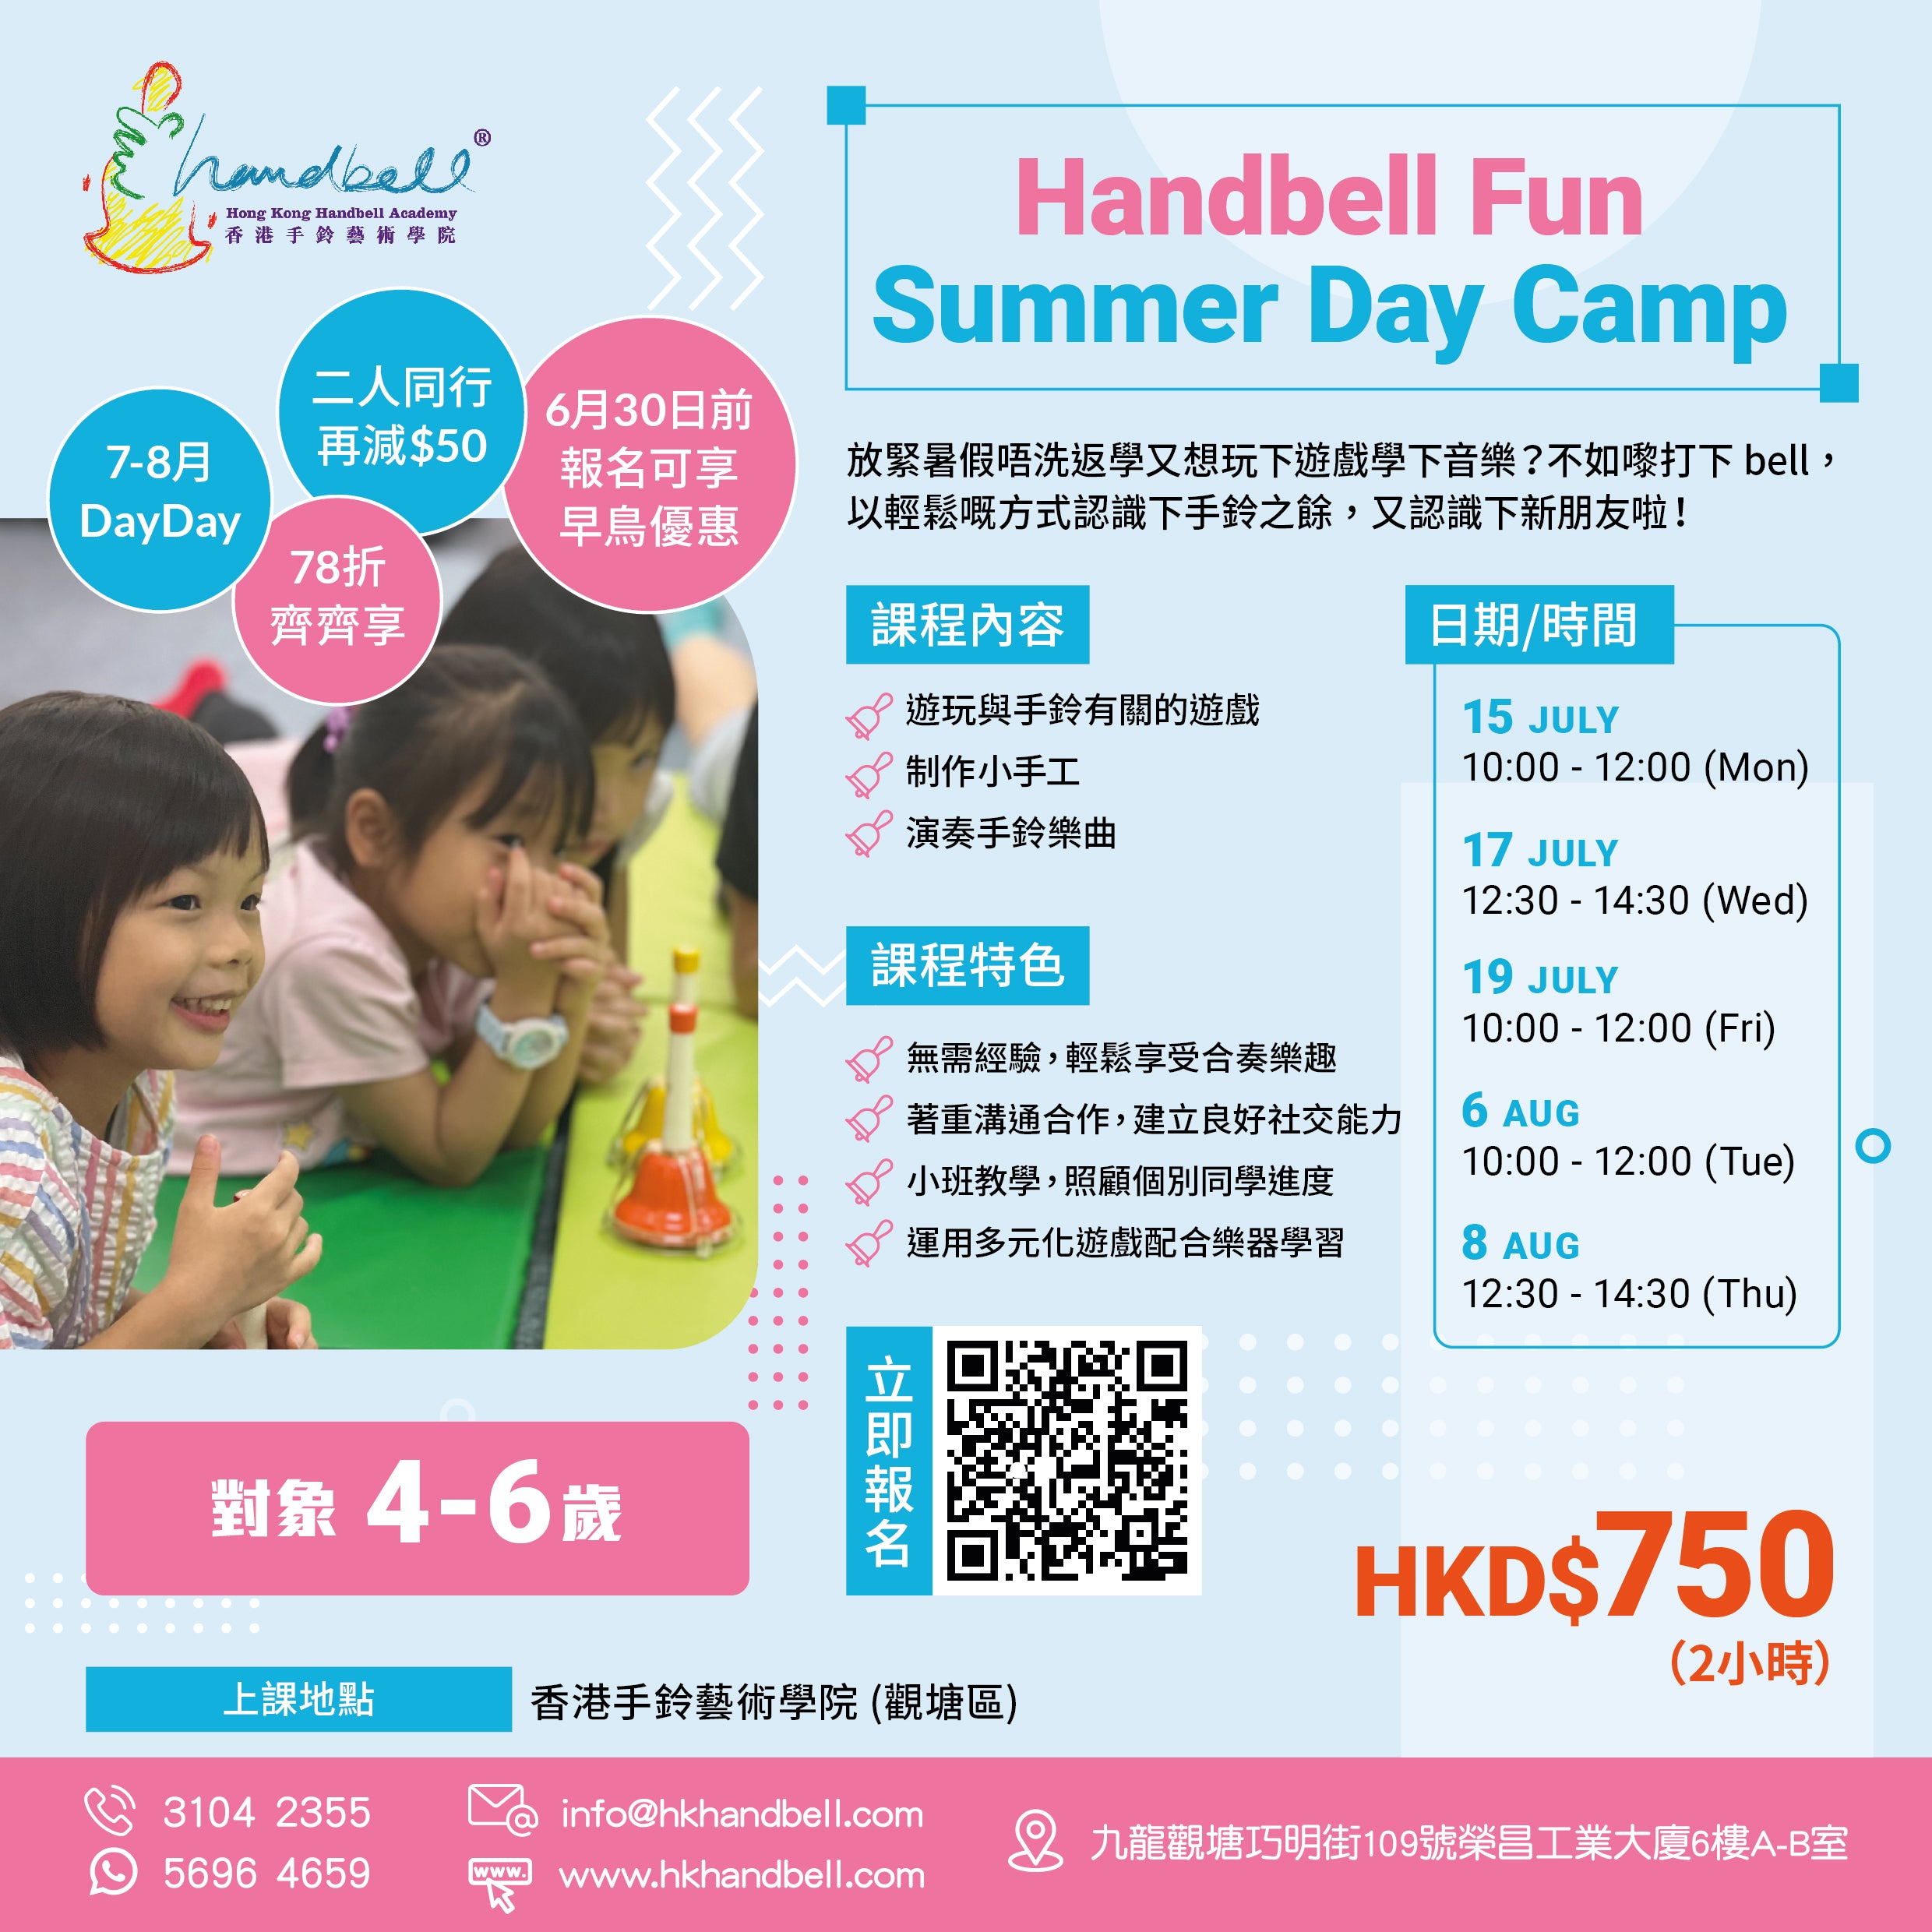 Handbell Fun Summer Day Camp